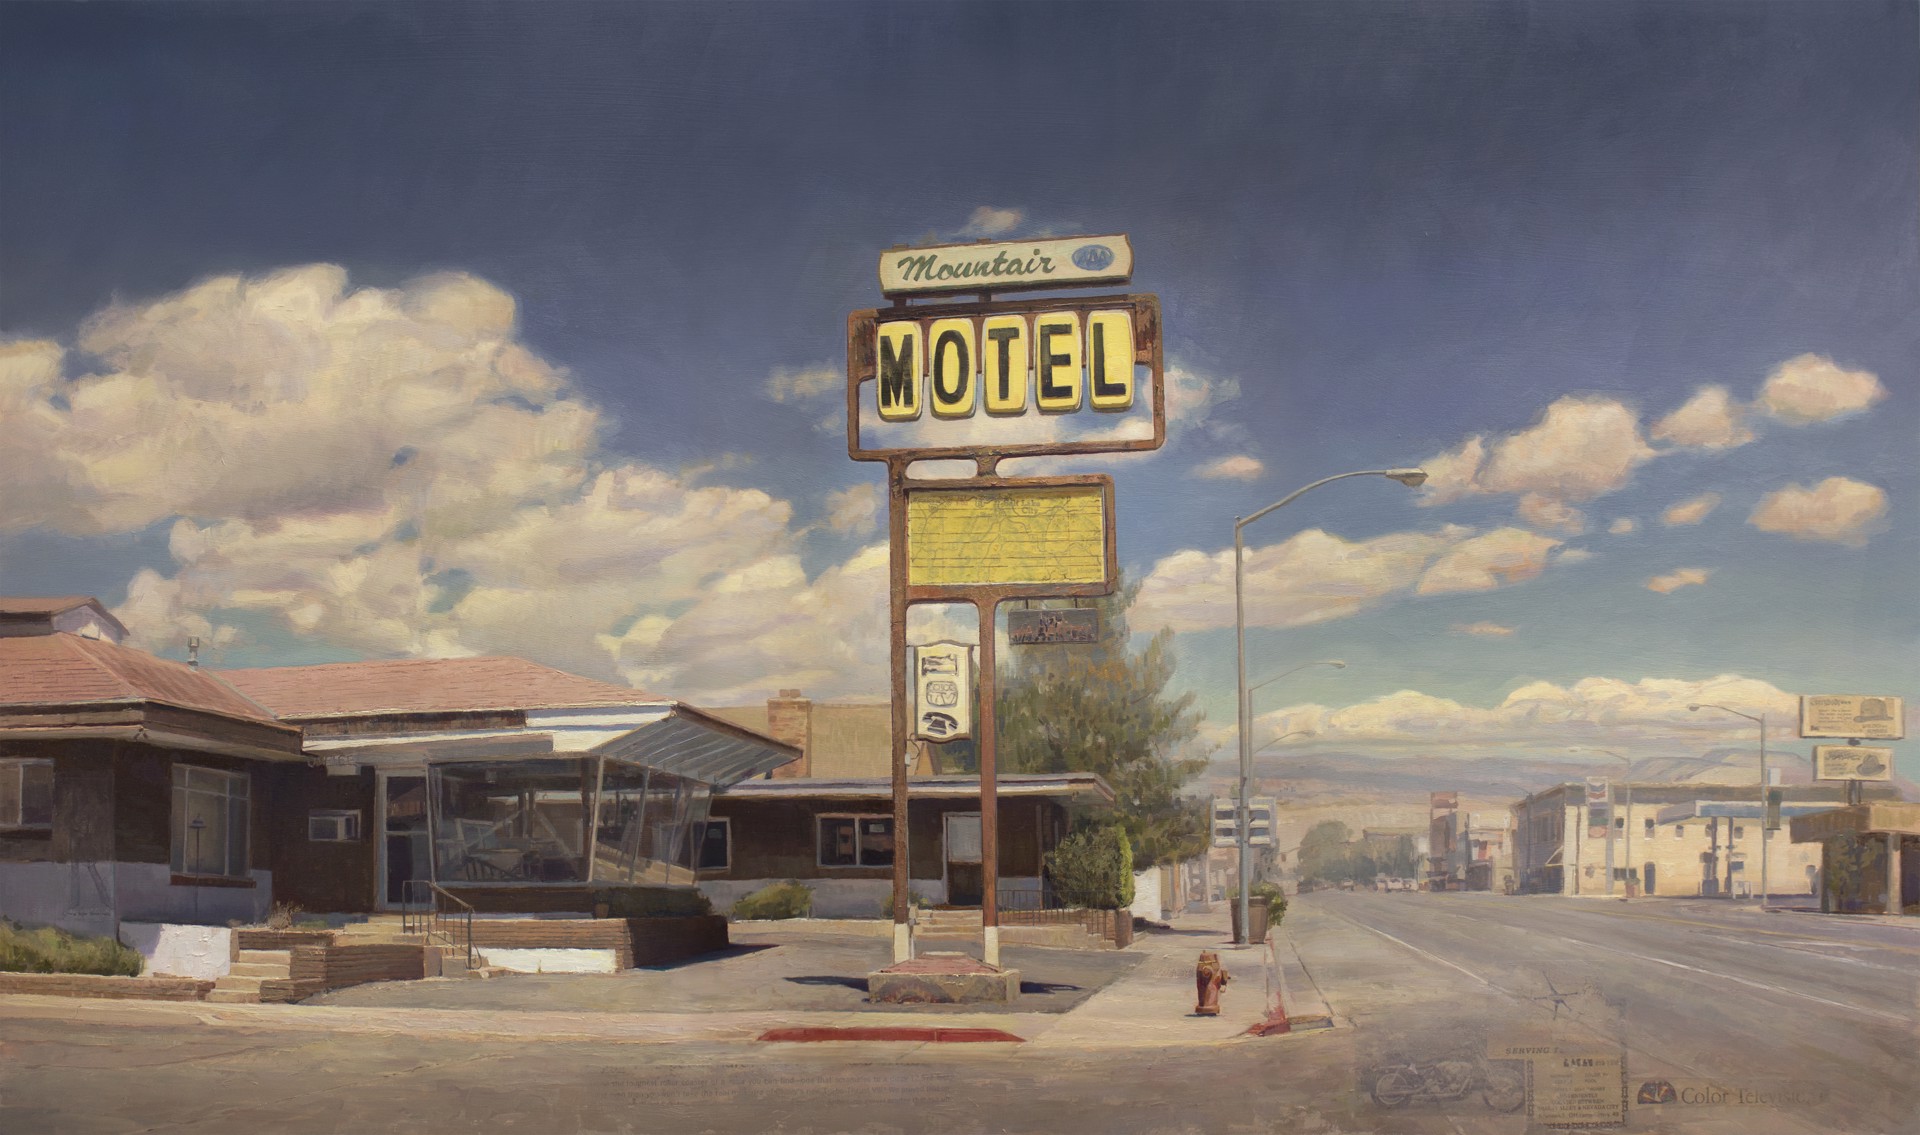 Mountair Motel by Jason Kowalski